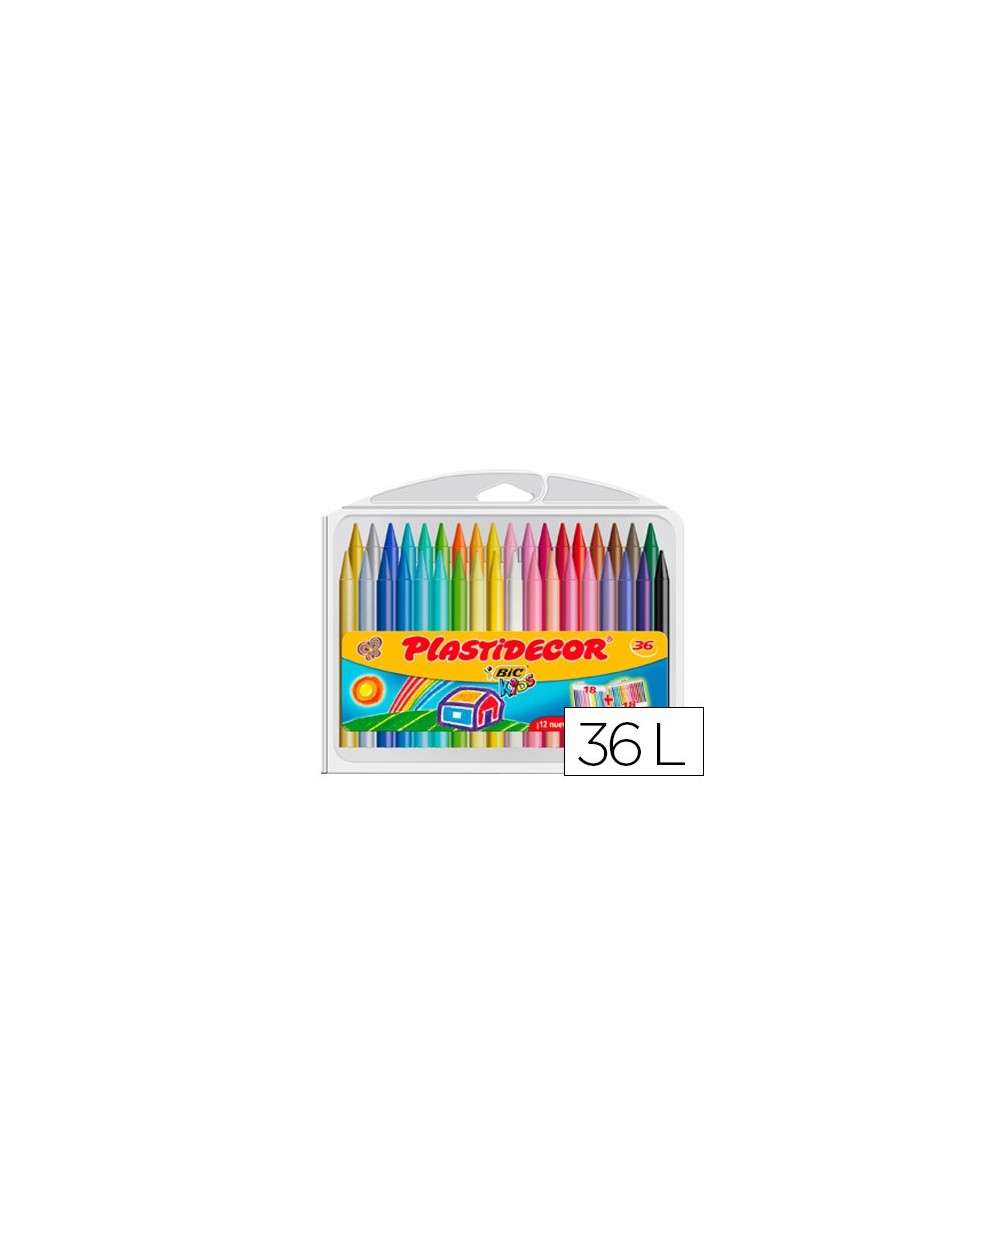 Lapices cera plastidecor caja de 36 colores